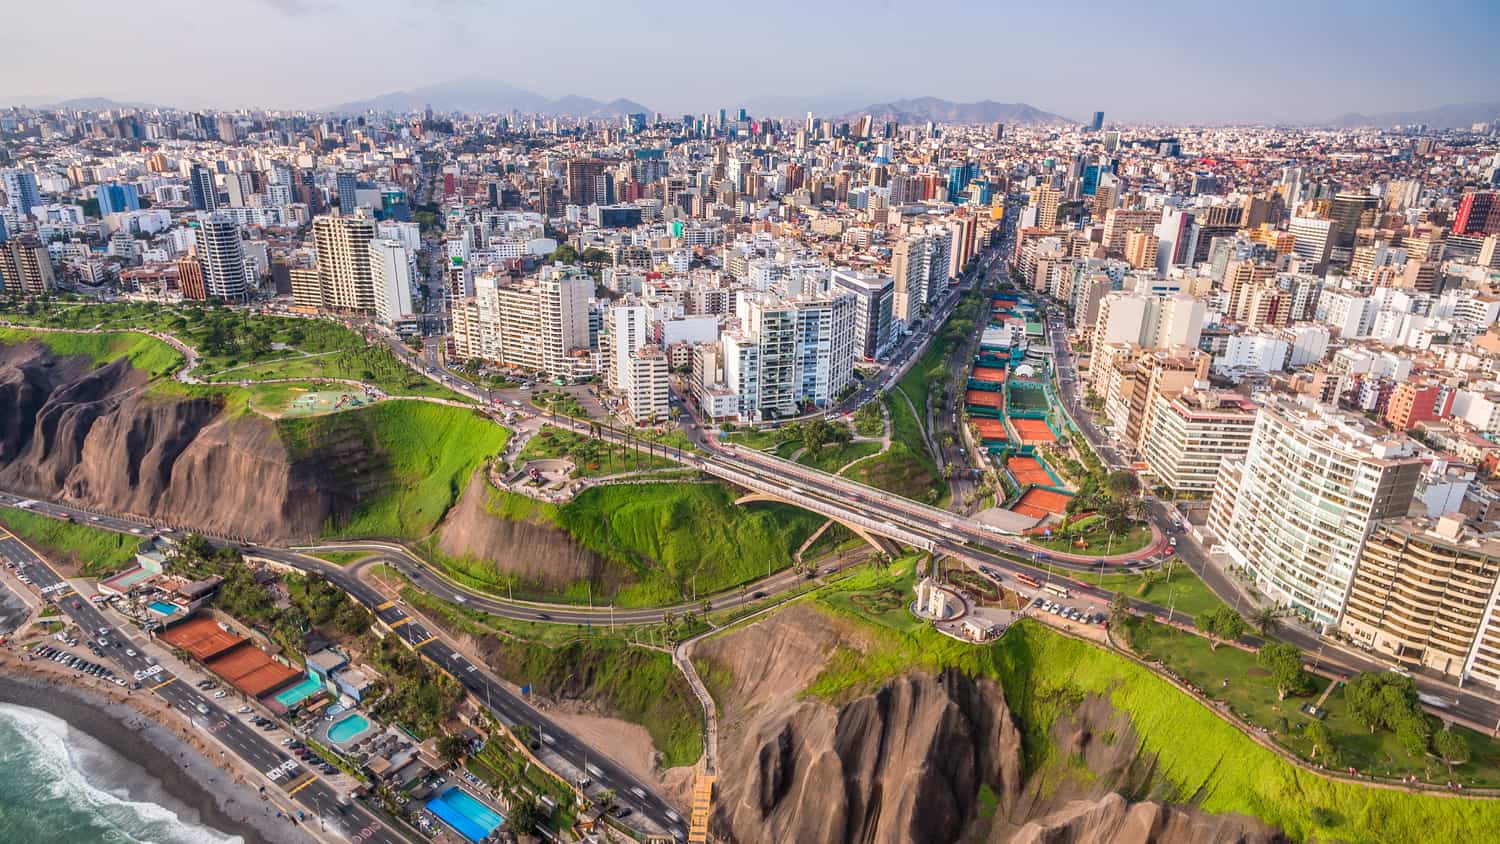 peruvian fintech, máximo, wins digital bank lima 2019